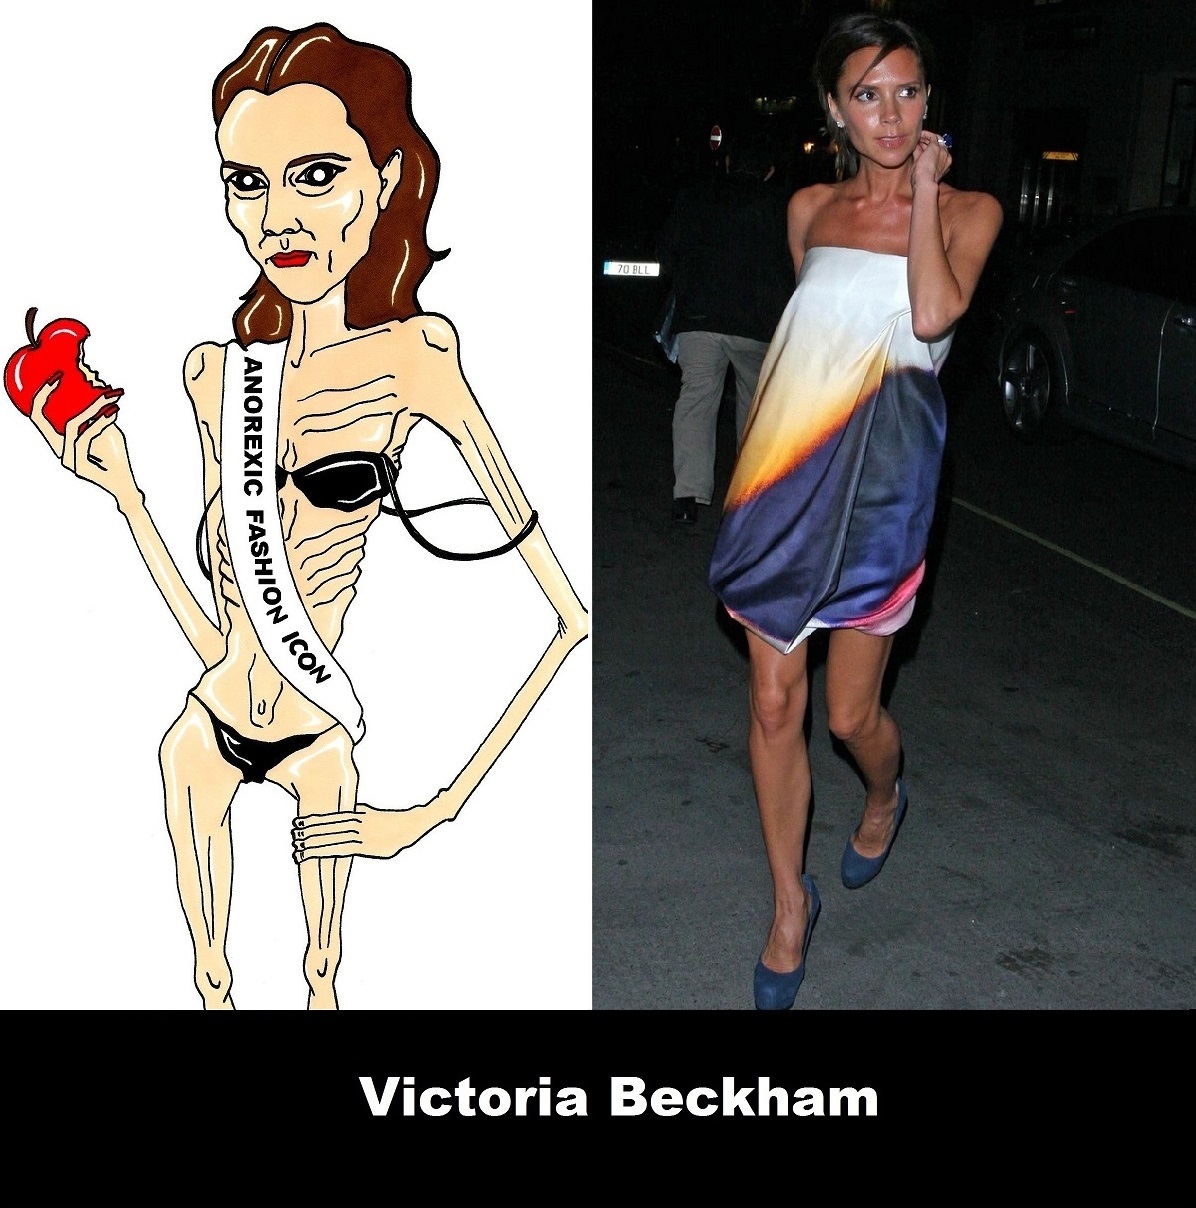 http://3.bp.blogspot.com/-FipiPtdnYNI/UXK39MZObjI/AAAAAAAAM94/RRIqgxKsJKo/s1600/Victoria+Beckham++the+most+influential+Anorexic+Fashion+icon+ever+Anorexia+Kills+Portrait+Art+Satire+Critic++Humor+Chic+by+aleXsandro+Palombo+1.jpg